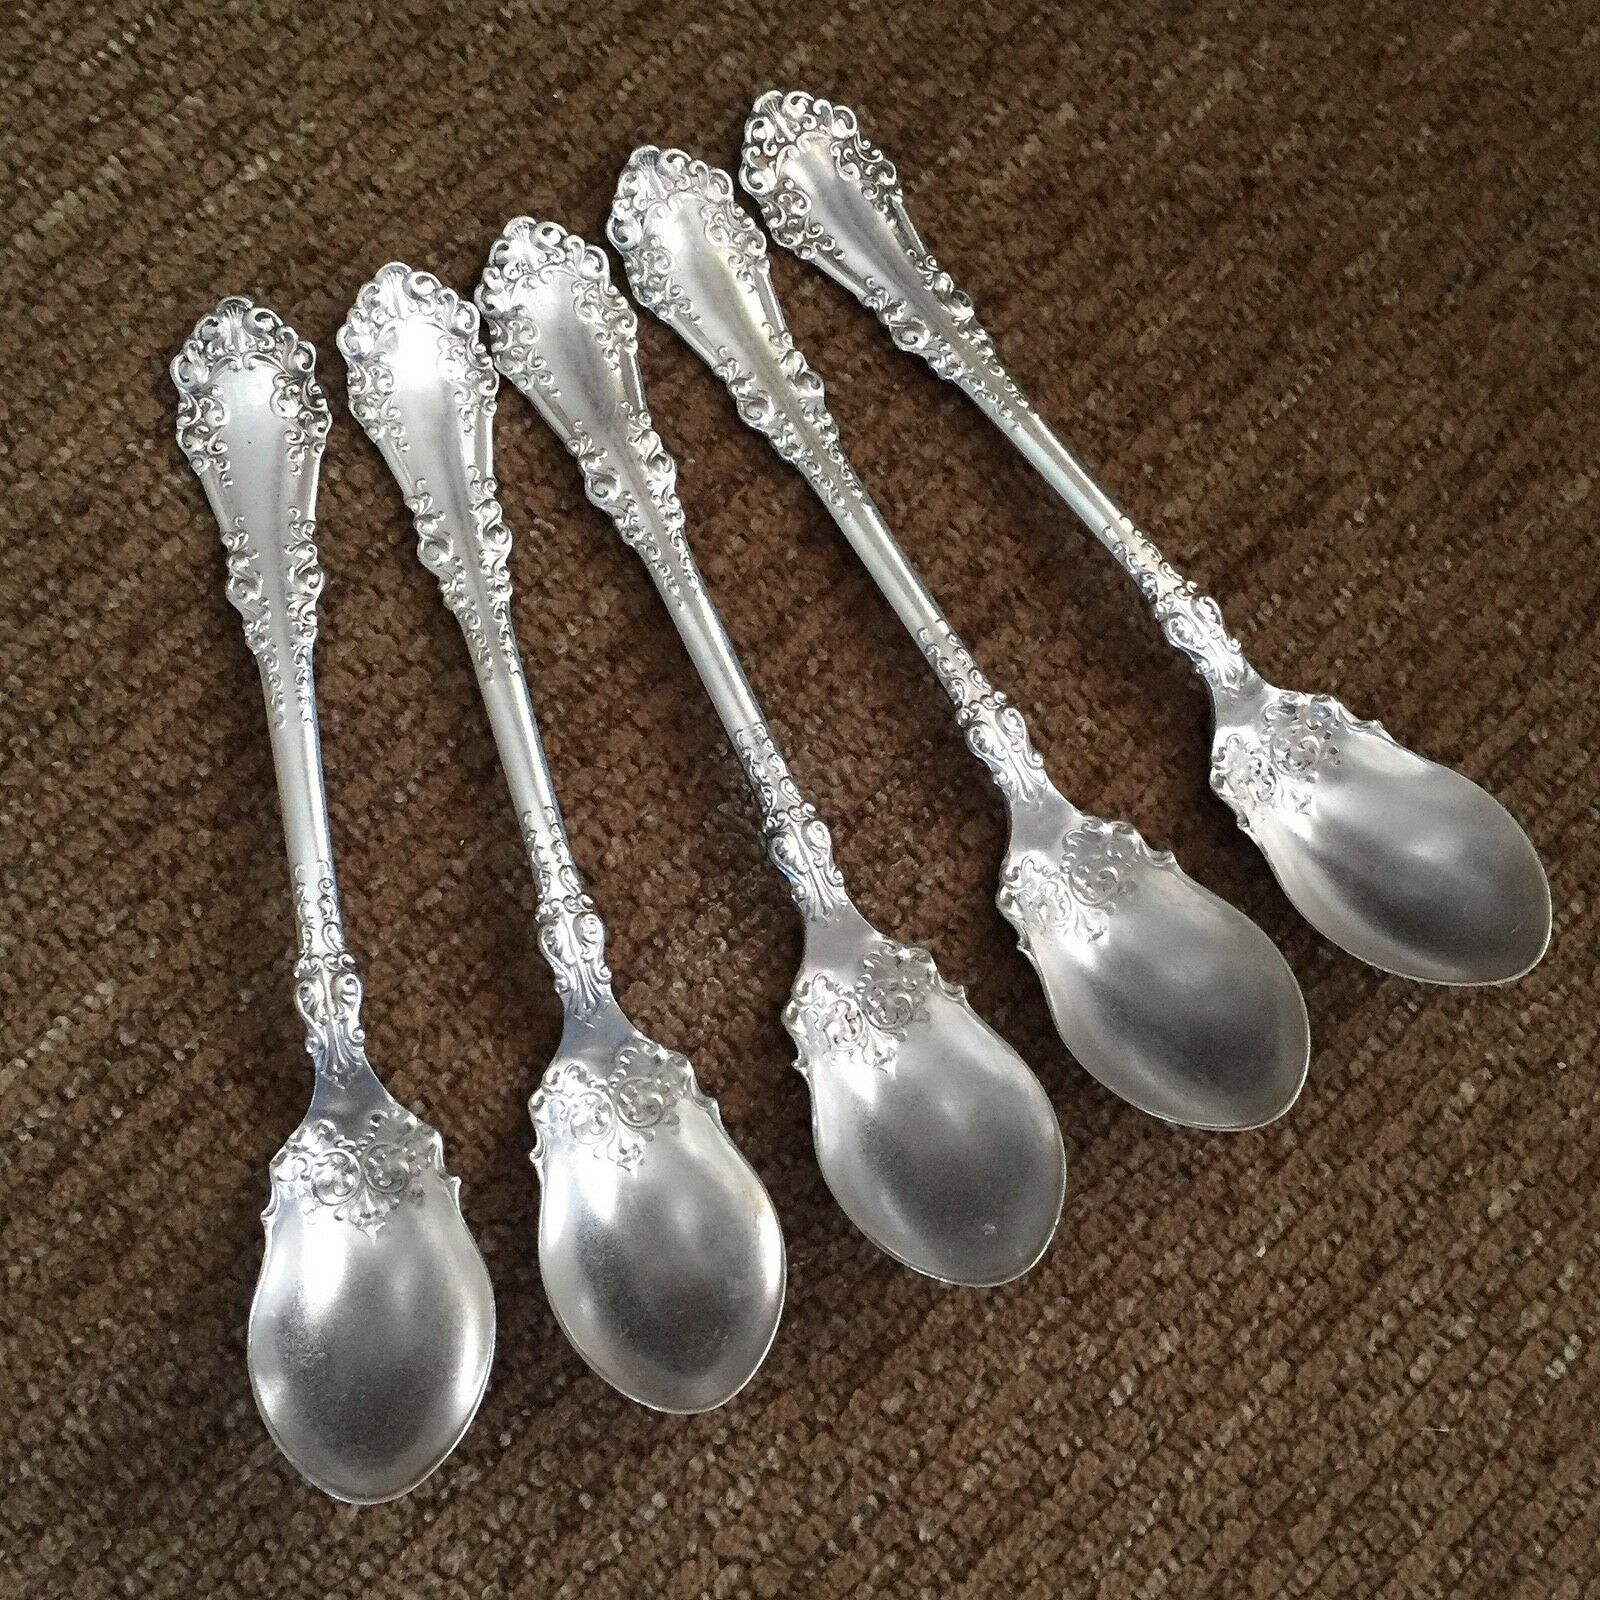 1847 Rogers Bros - BERKSHIRE 1897 - 5 Silverplate Ice Cream Spoons - No Monogram - $75.00